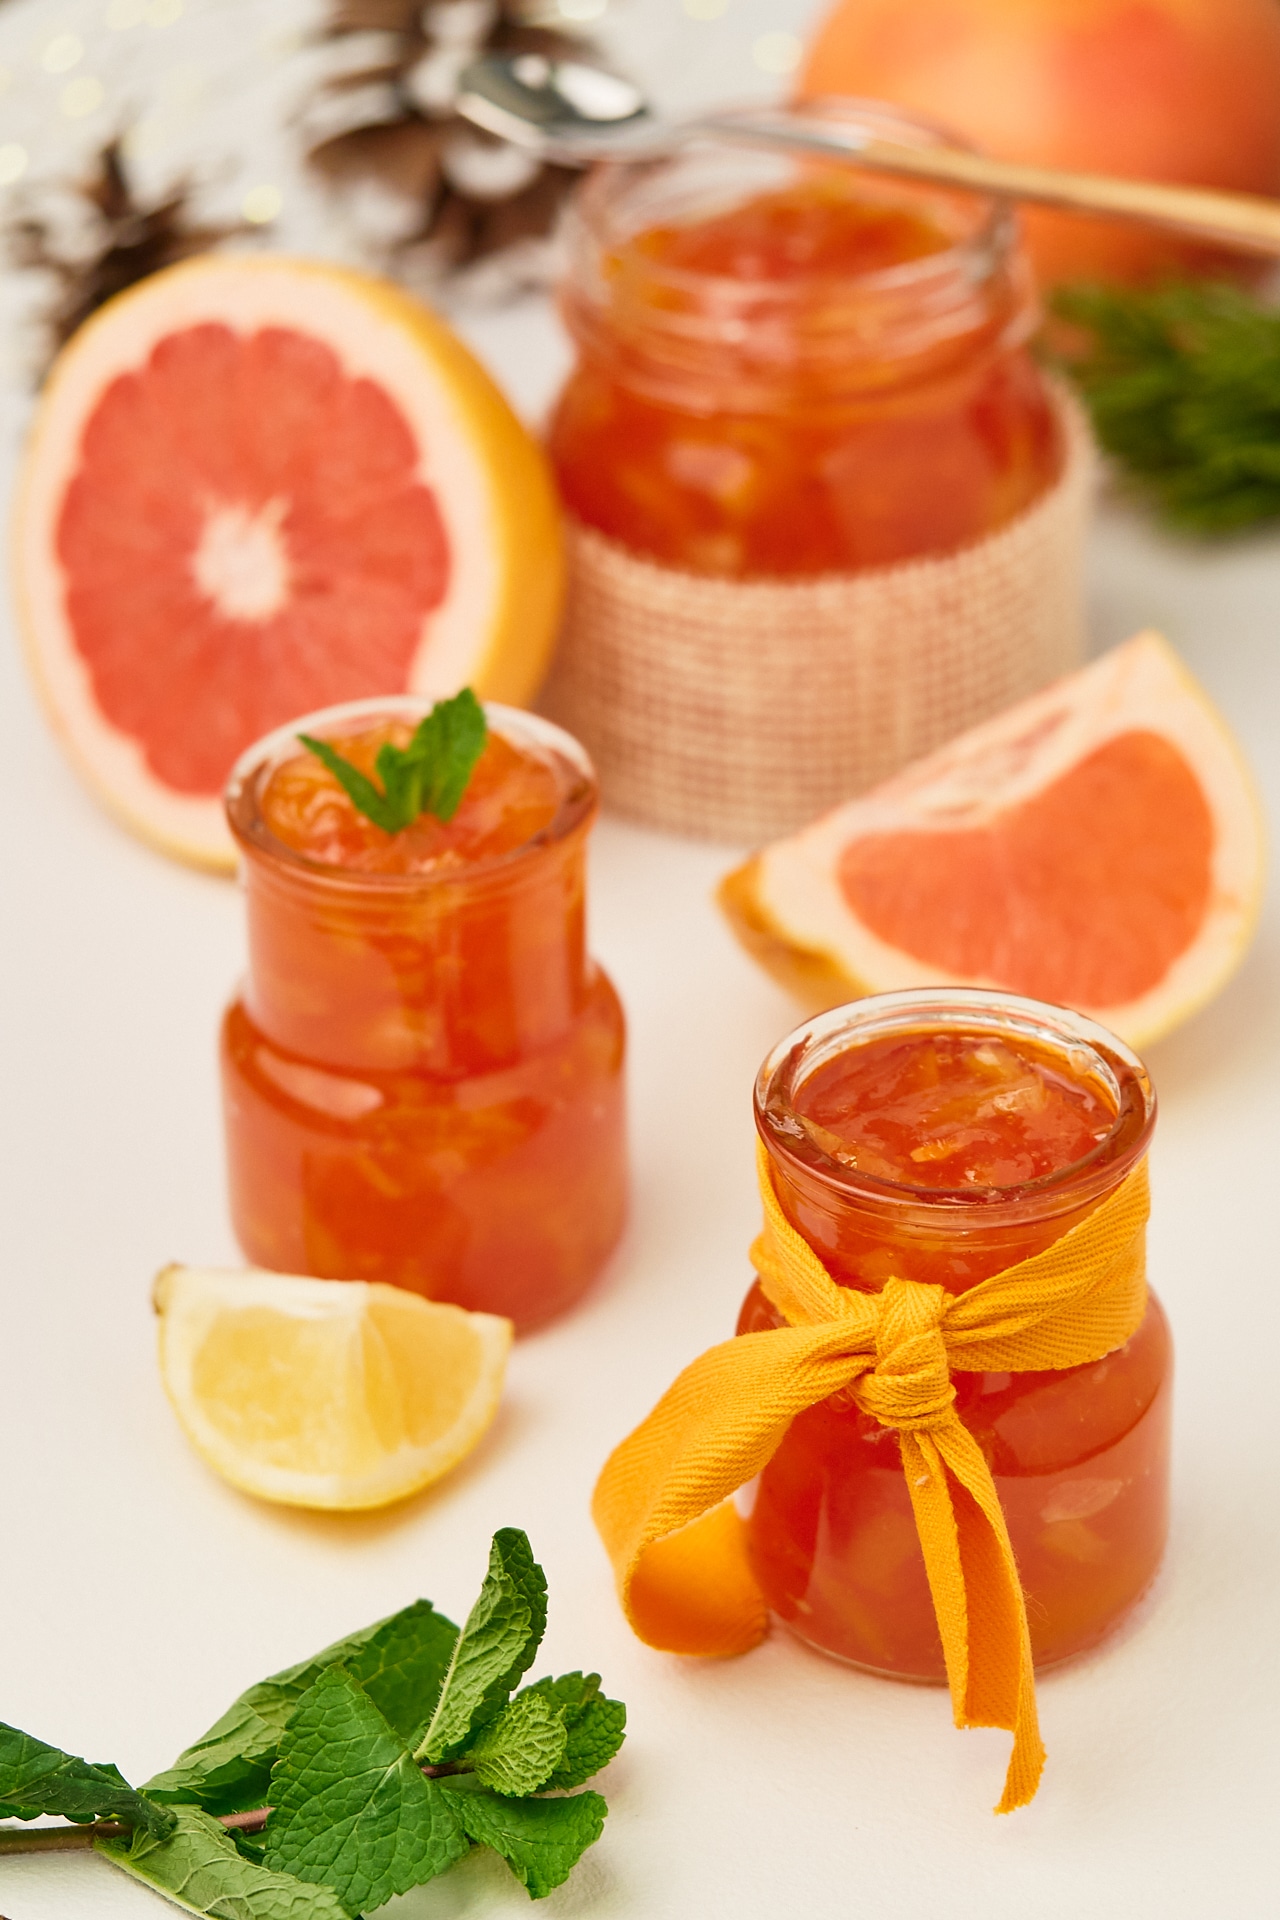 Mela Vitamins Weekly Vitamin Case on Marmalade